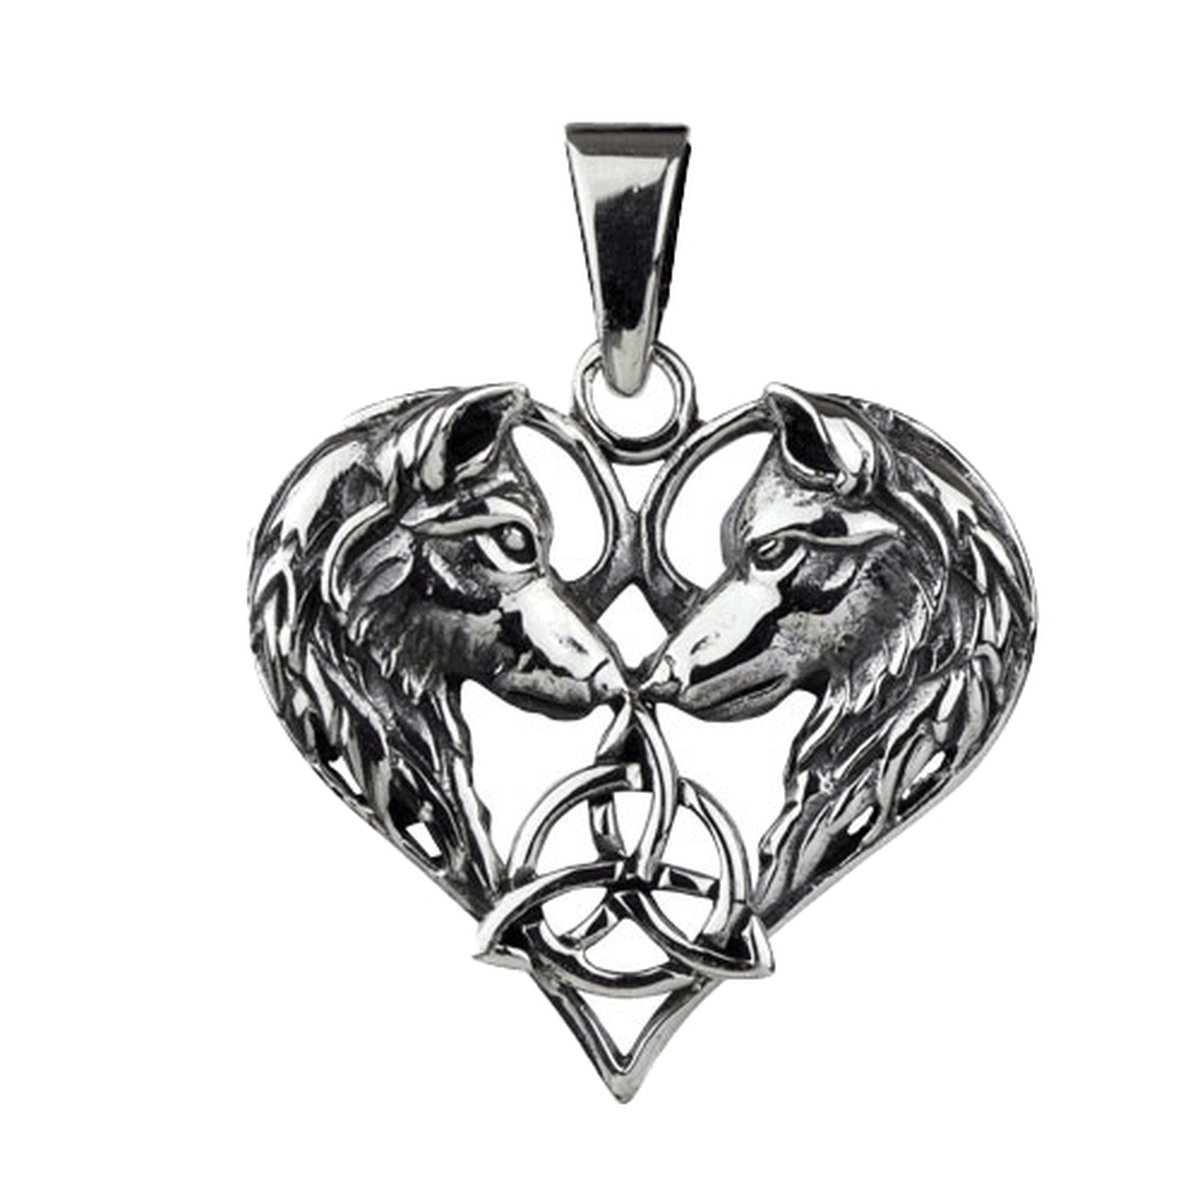 Hanger - Wolf Heart - 925 sterling silver